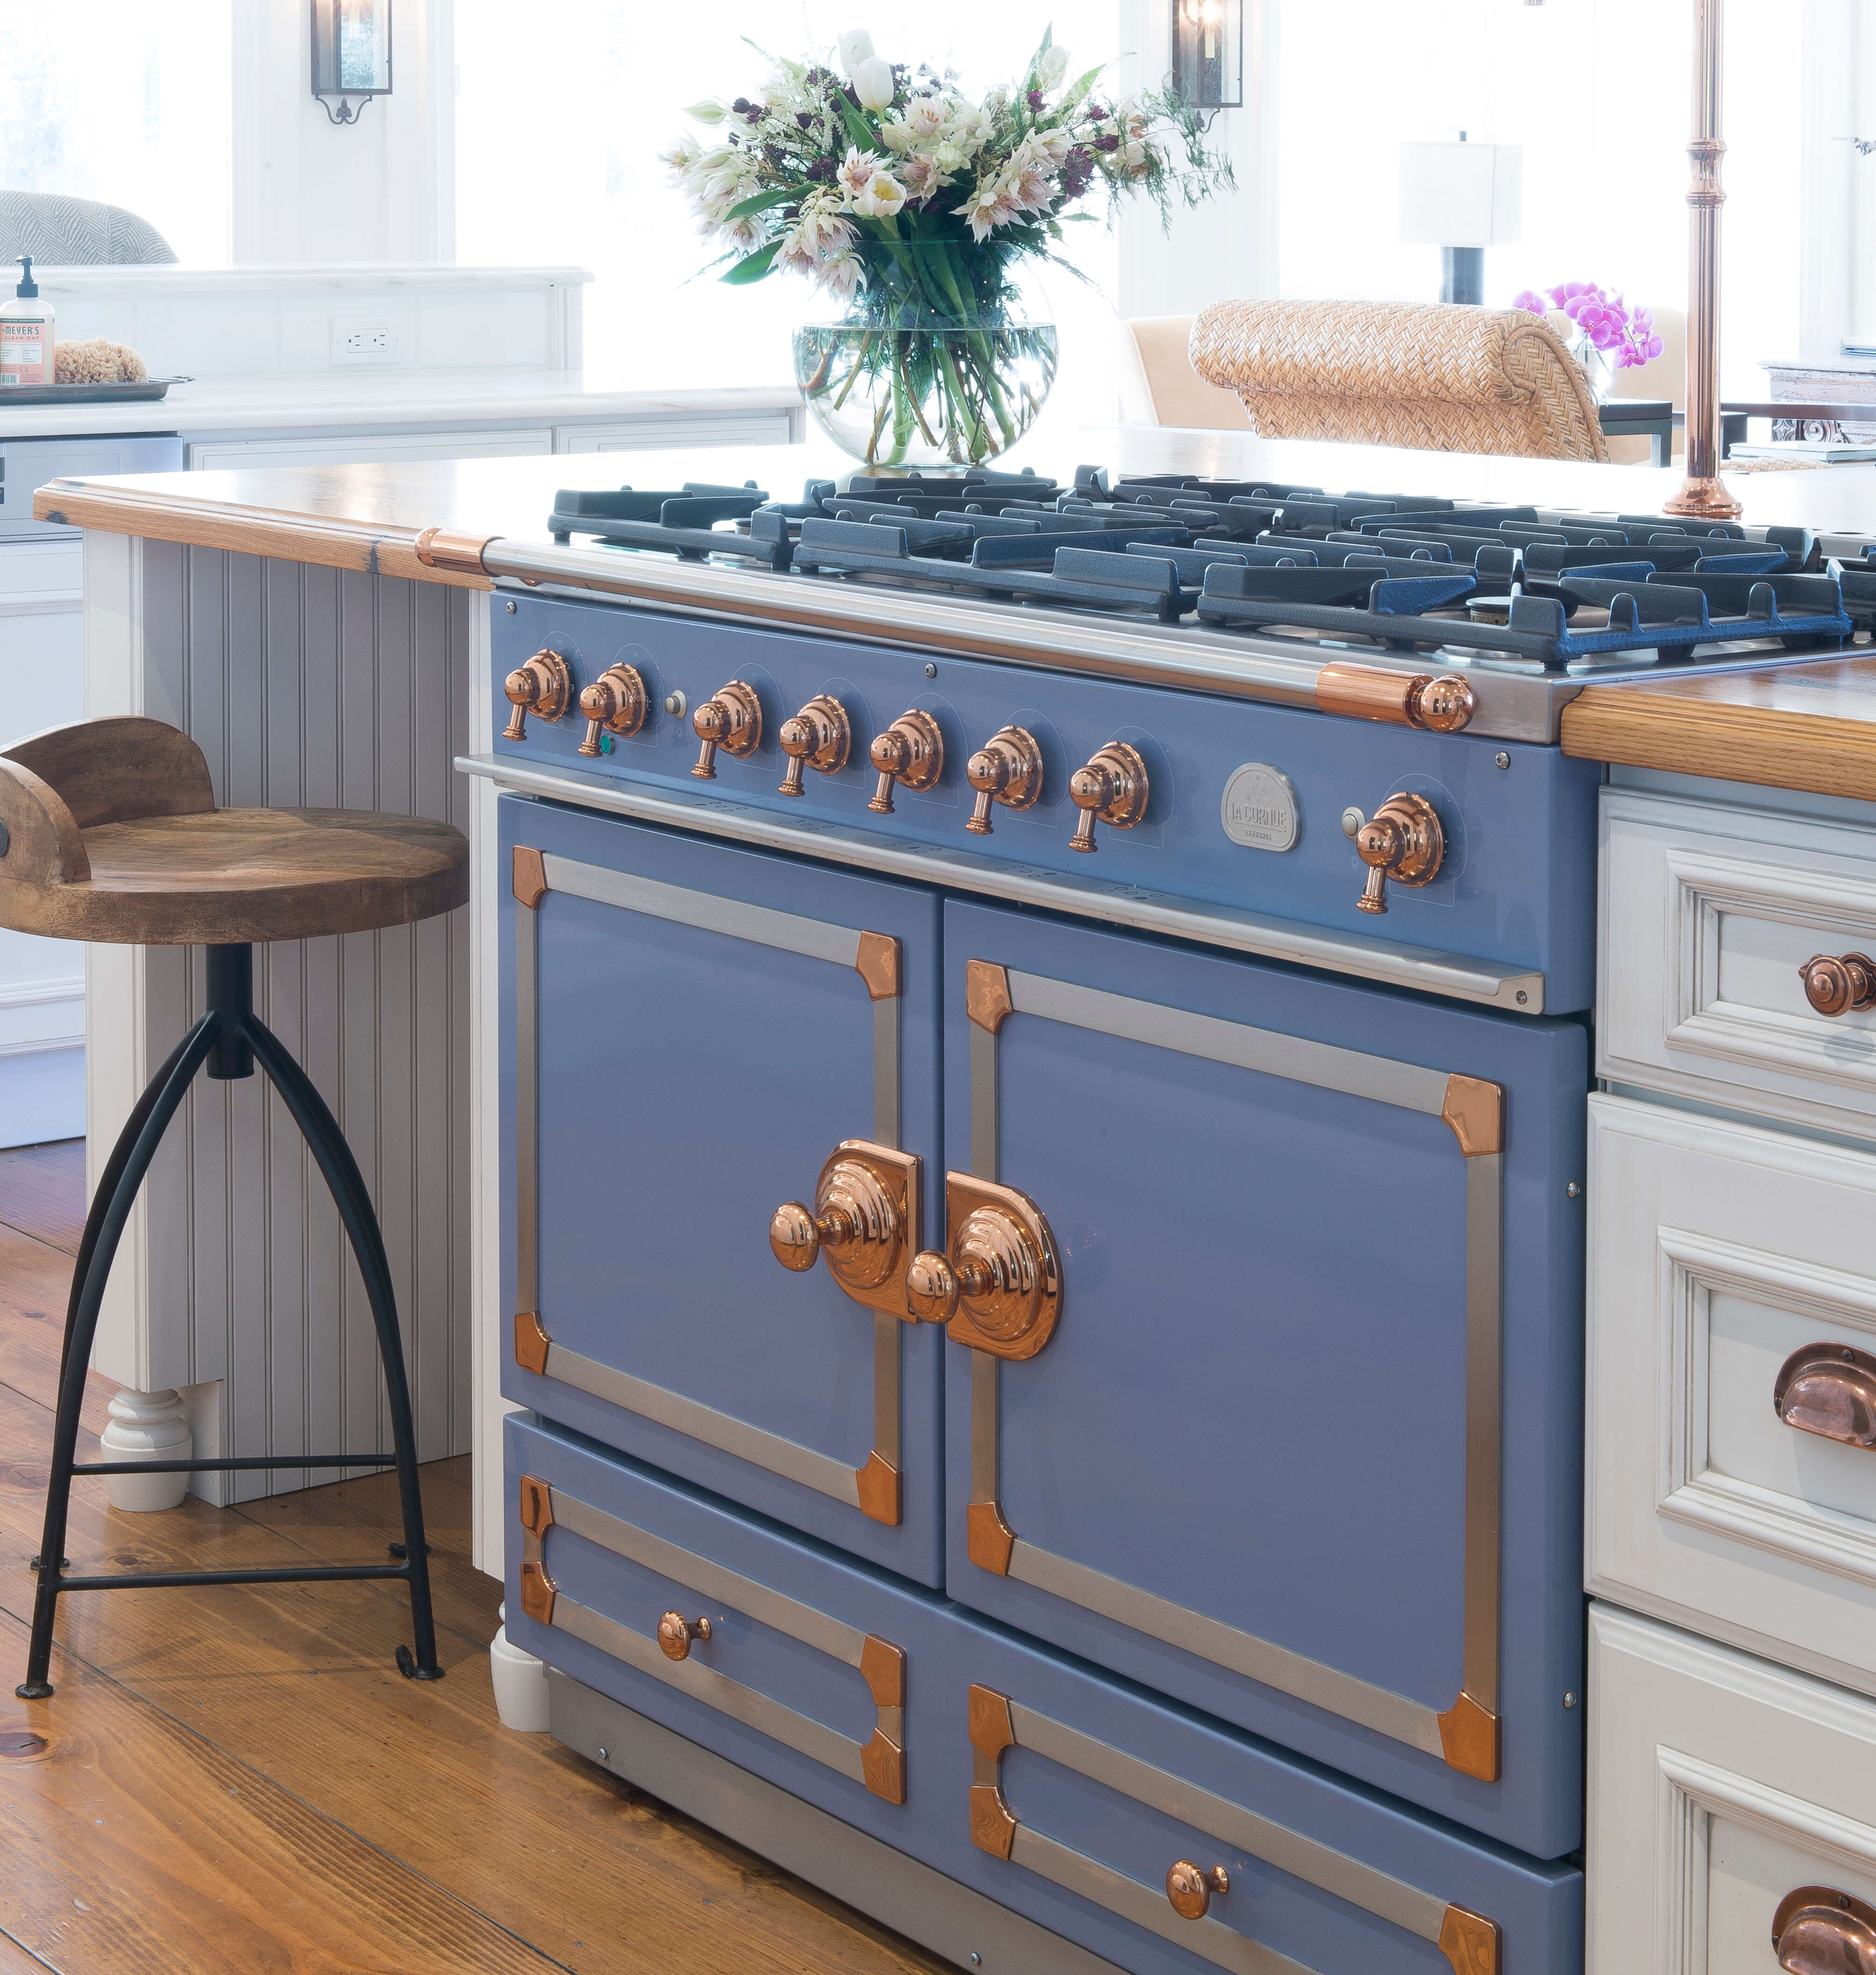 Dura Supreme Cabinetry kitchen design by Jenny Rausch of Karr Bick Kitchen & Bath. Photo by Studio 10Seven.